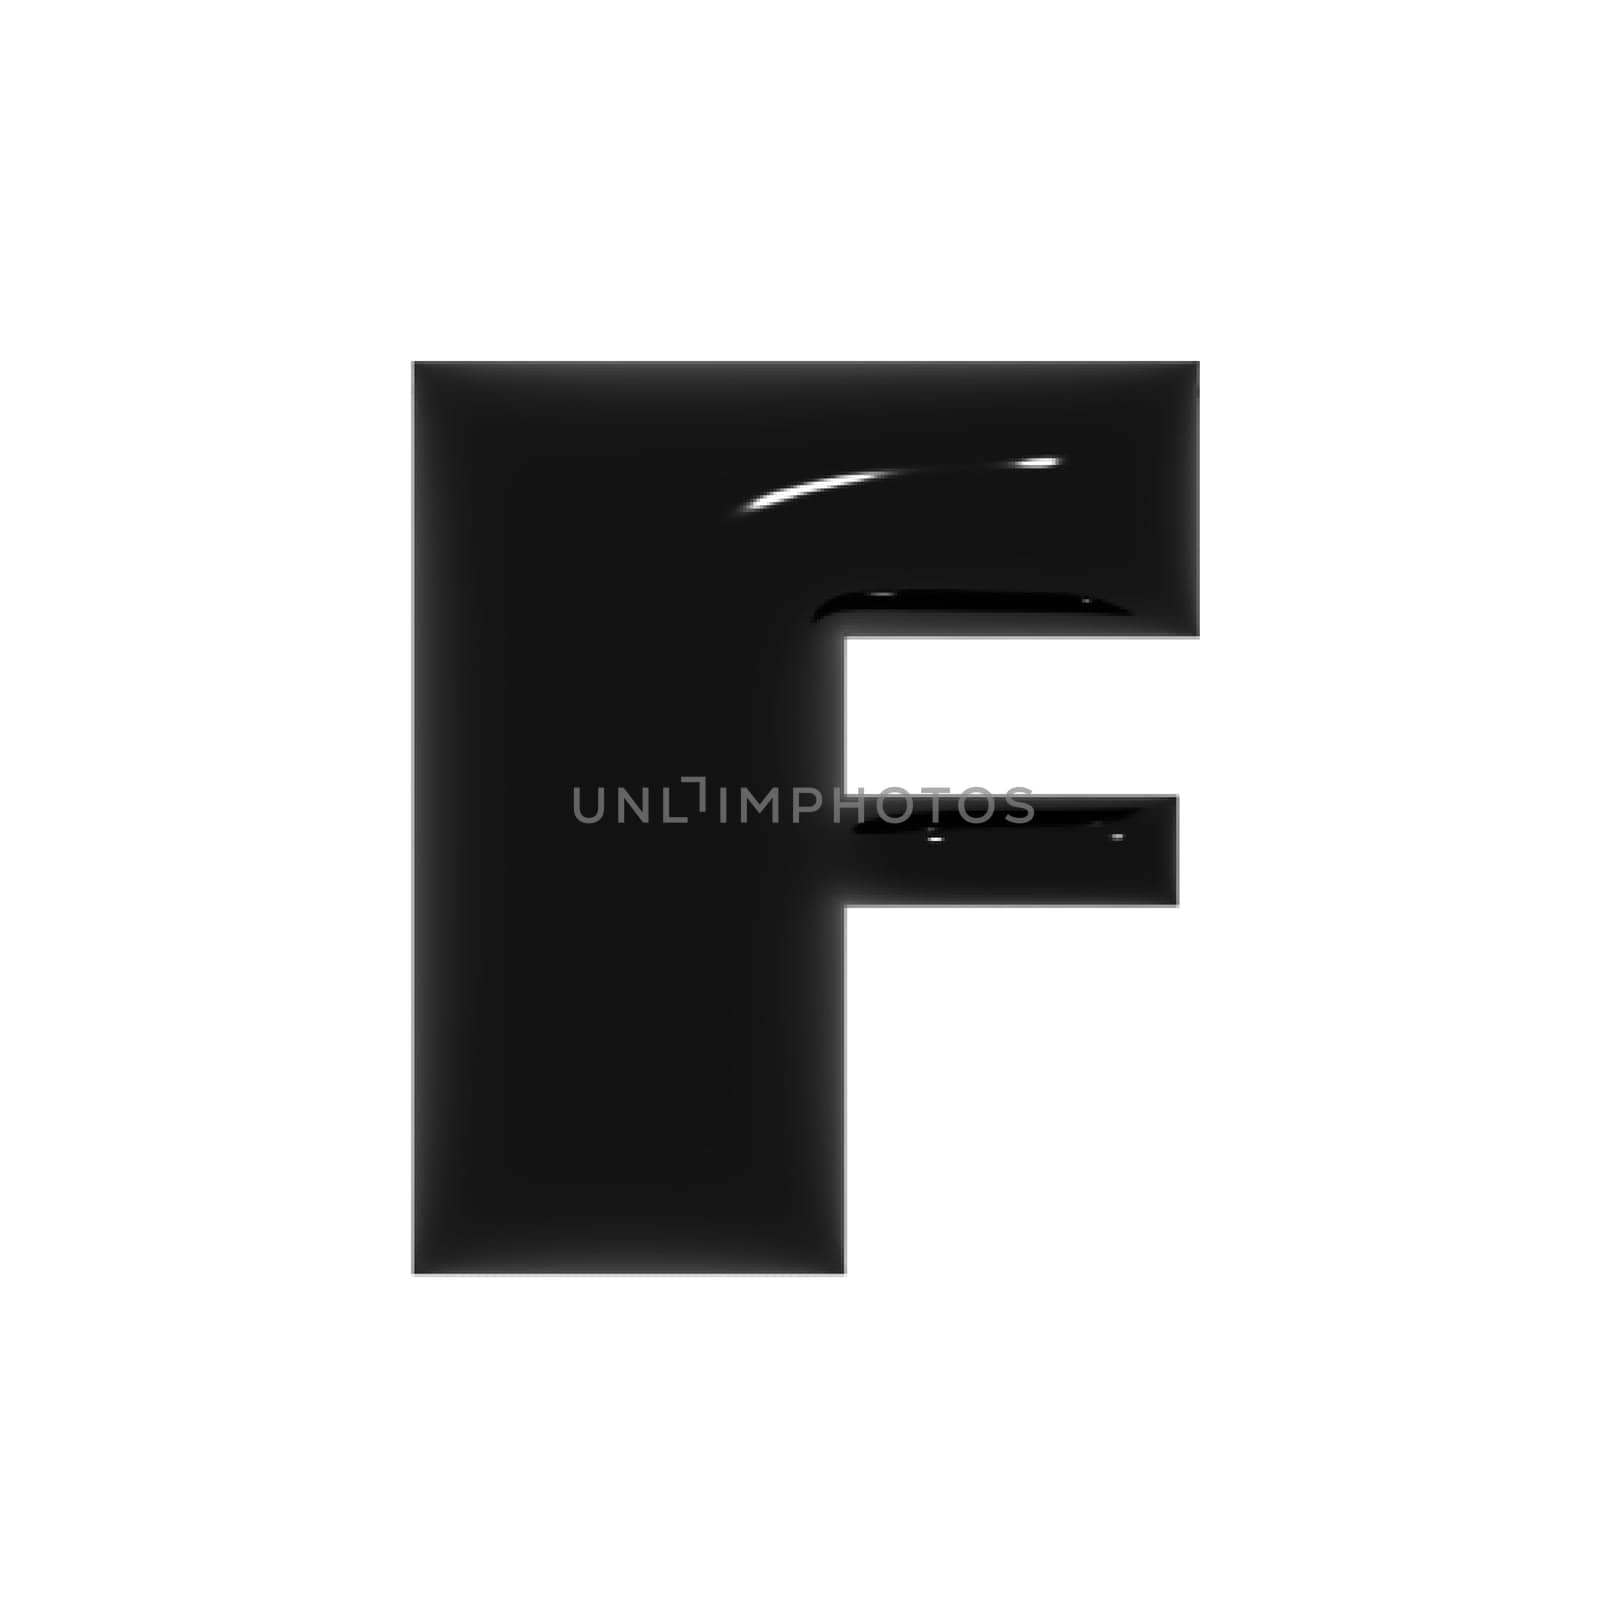 Black metal shiny reflective letter F 3D illustration by Dustick